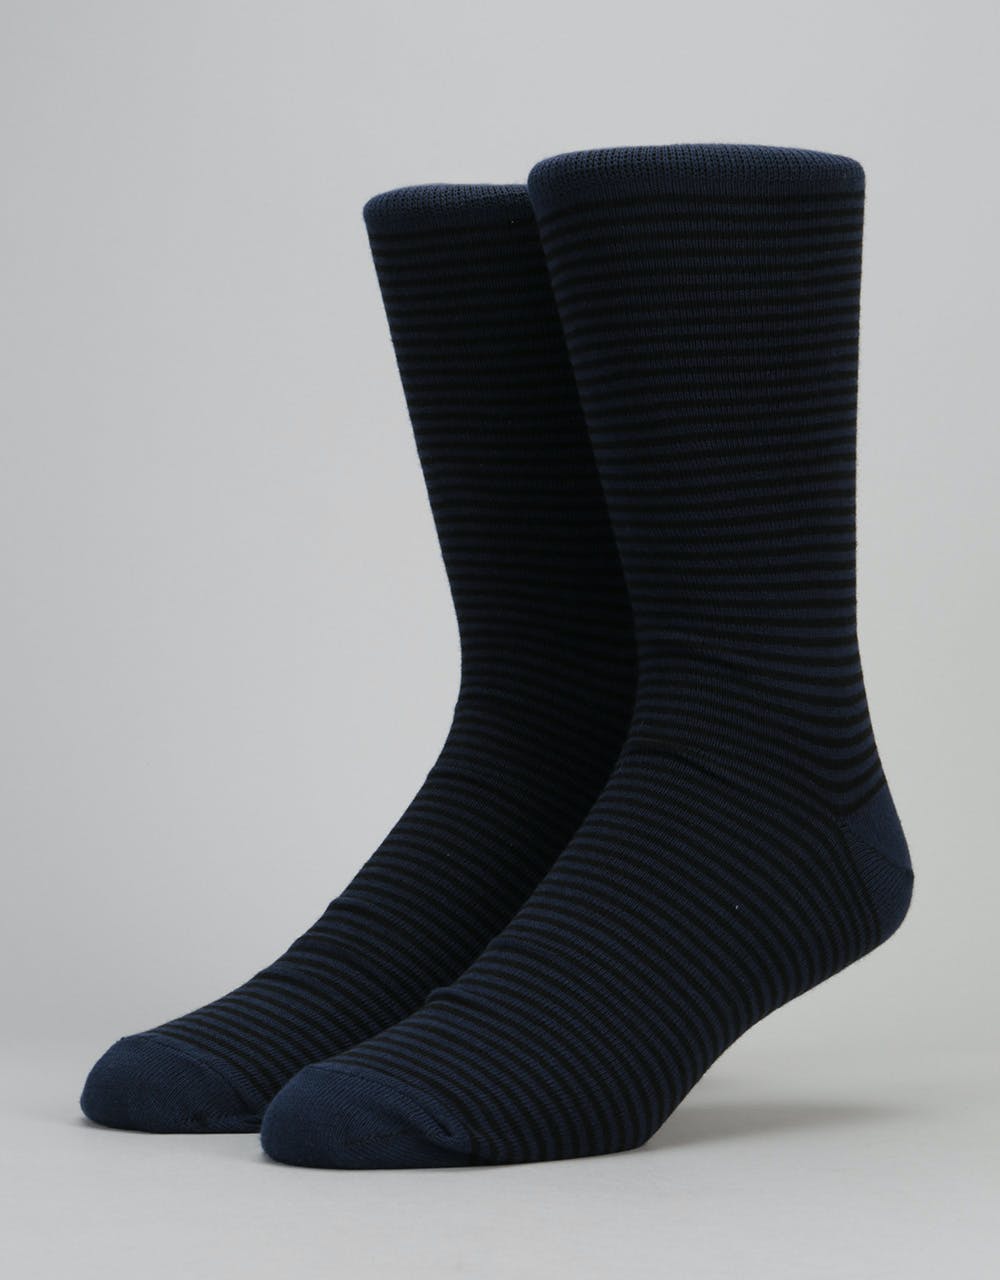 Route One Thin Stripe Socks - Black/Navy